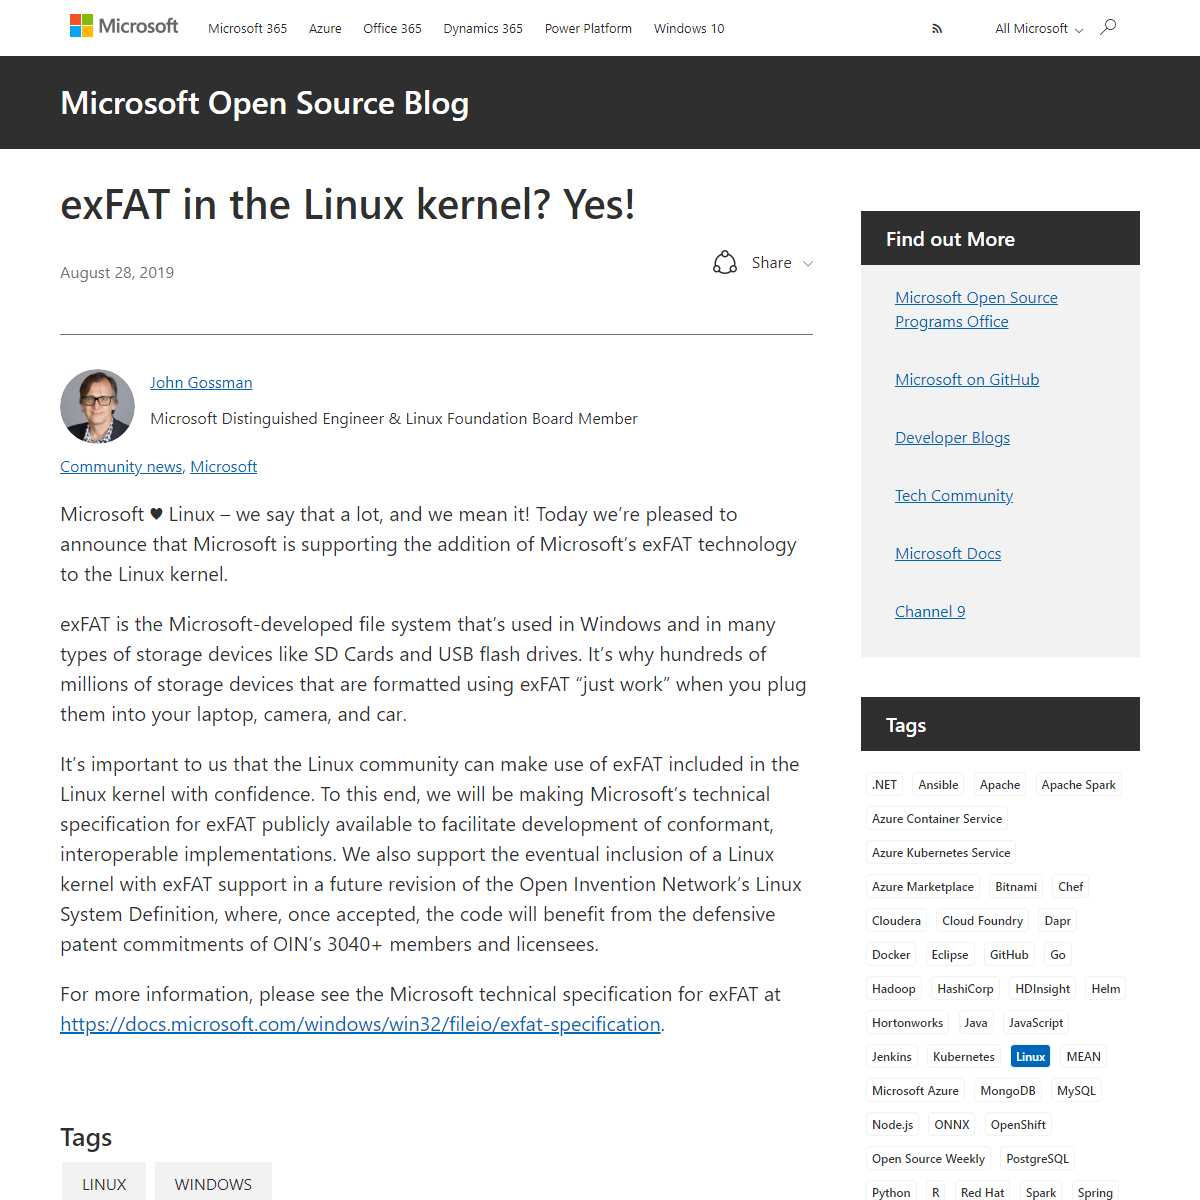 A complete backup of https://cloudblogs.microsoft.com/opensource/2019/08/28/exfat-linux-kernel/